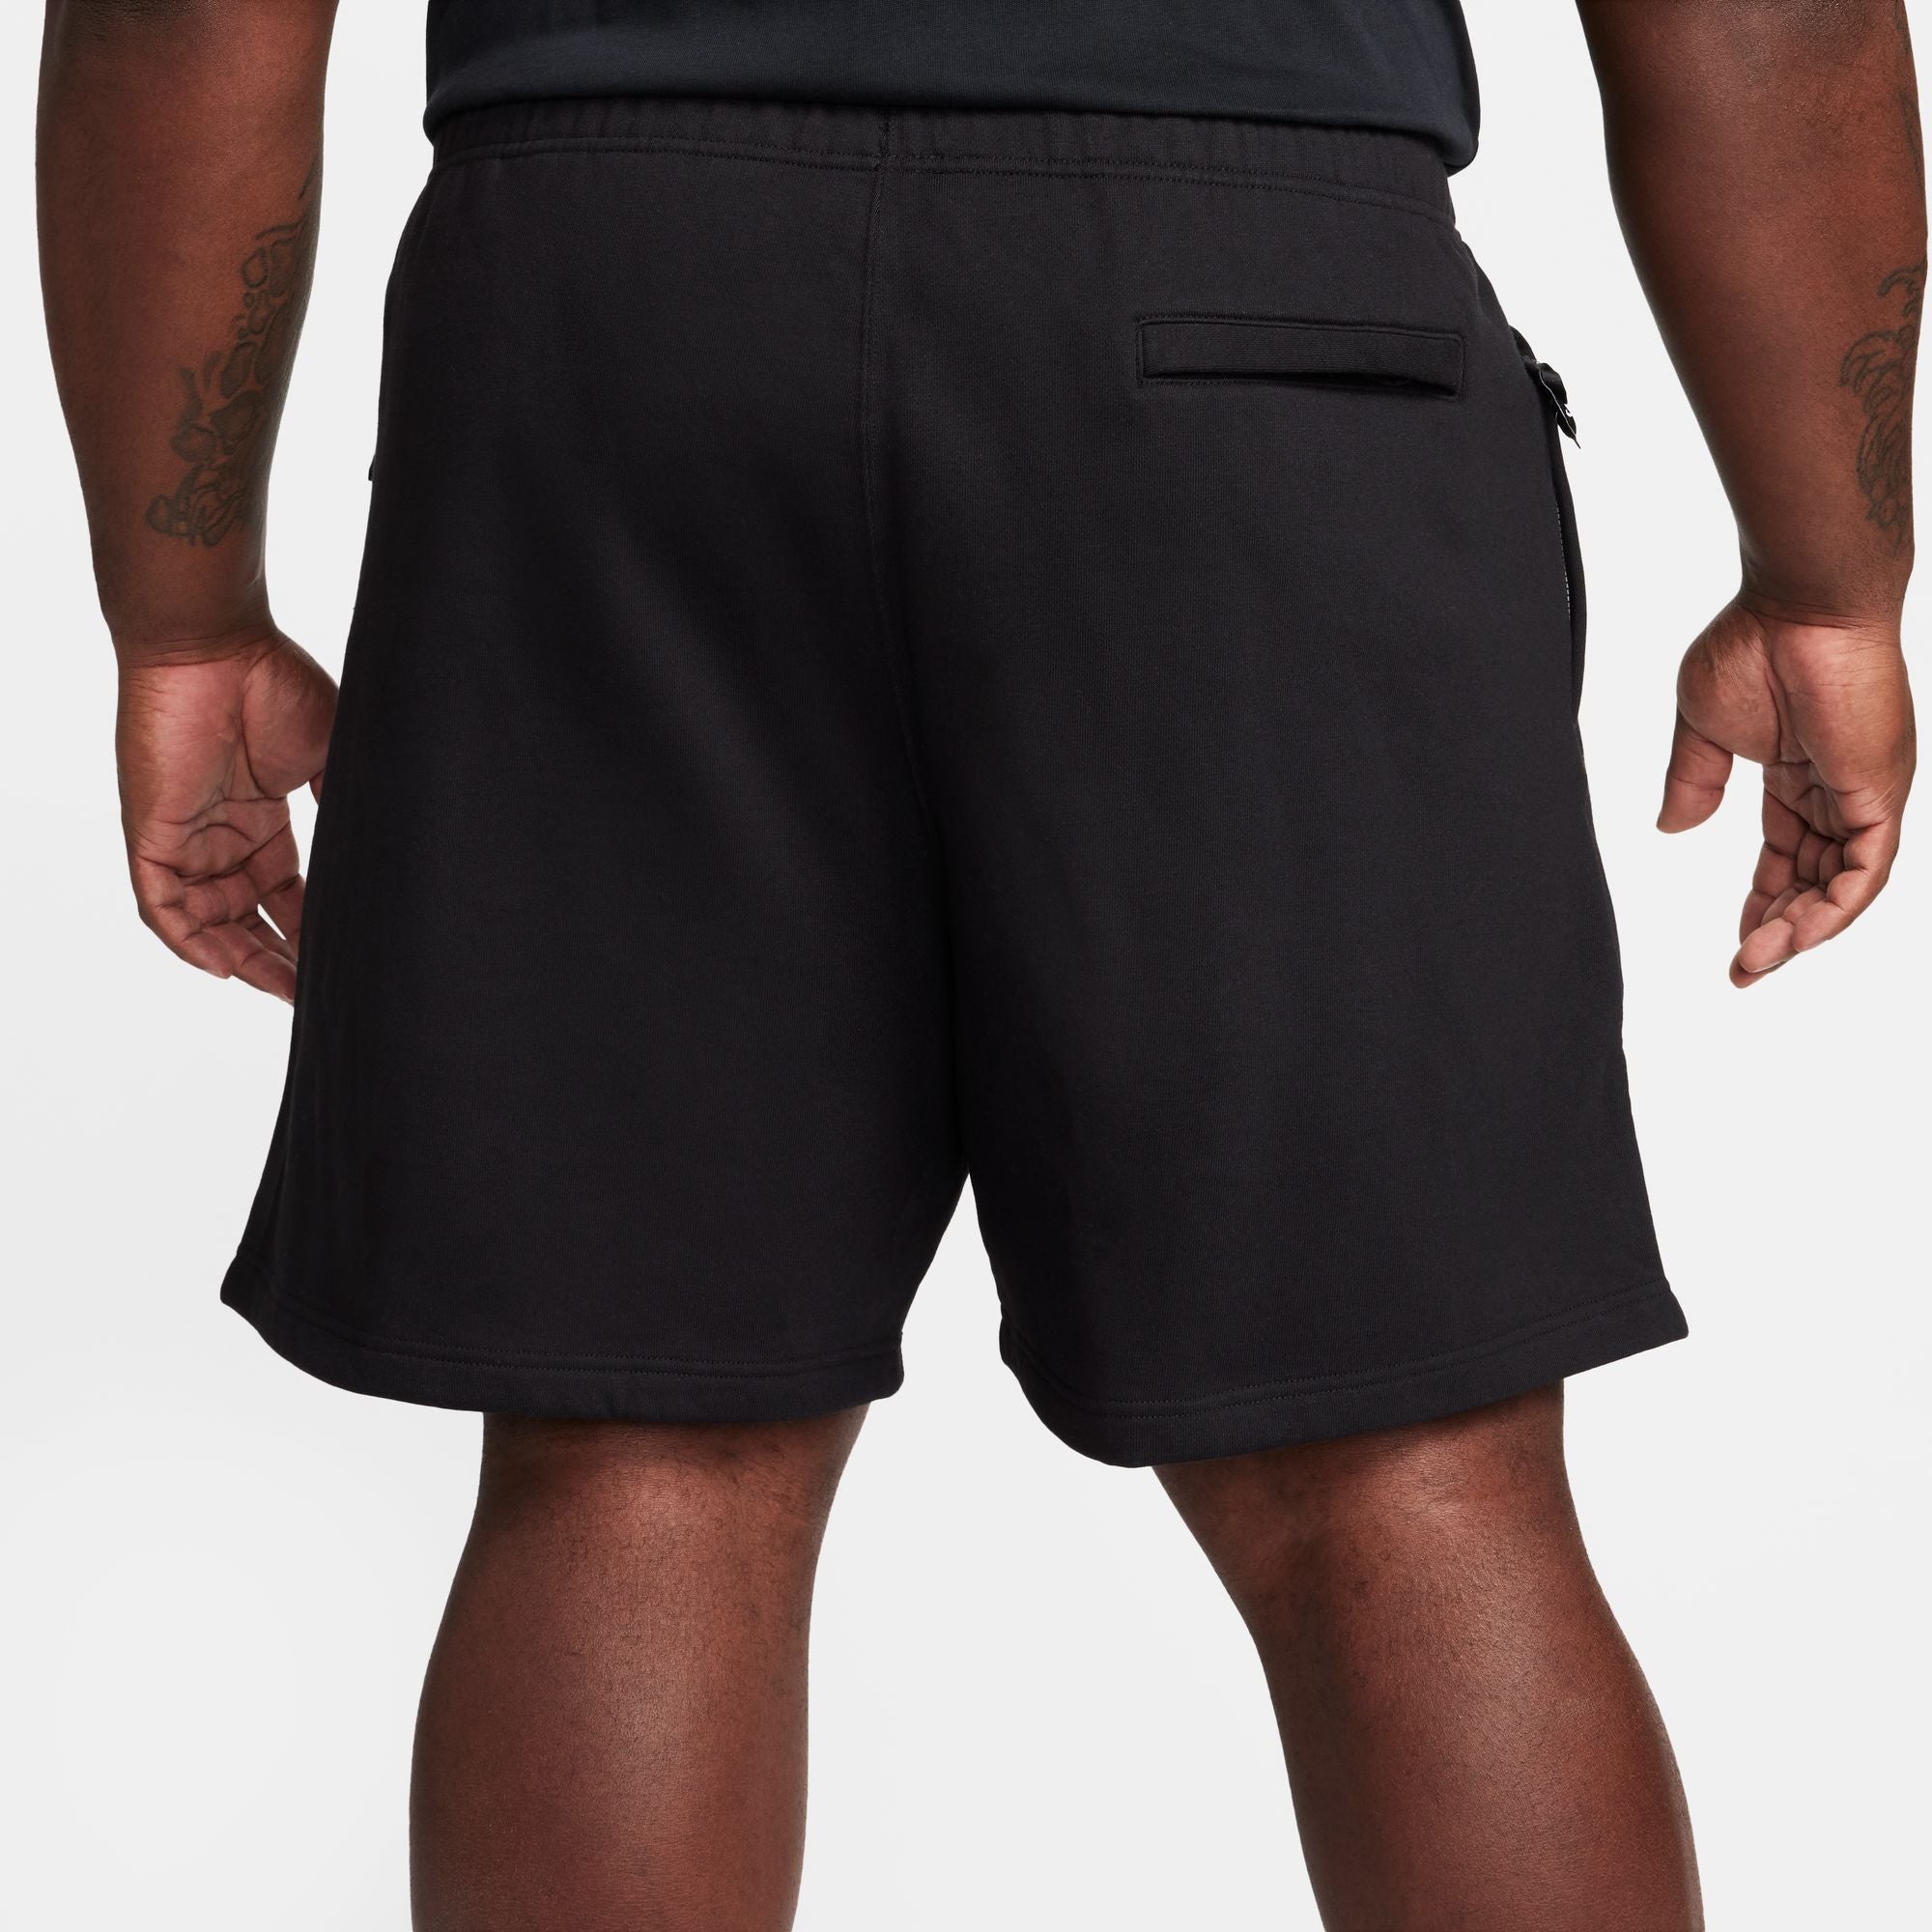 Nike Solo Swoosh Black Fleece Shorts